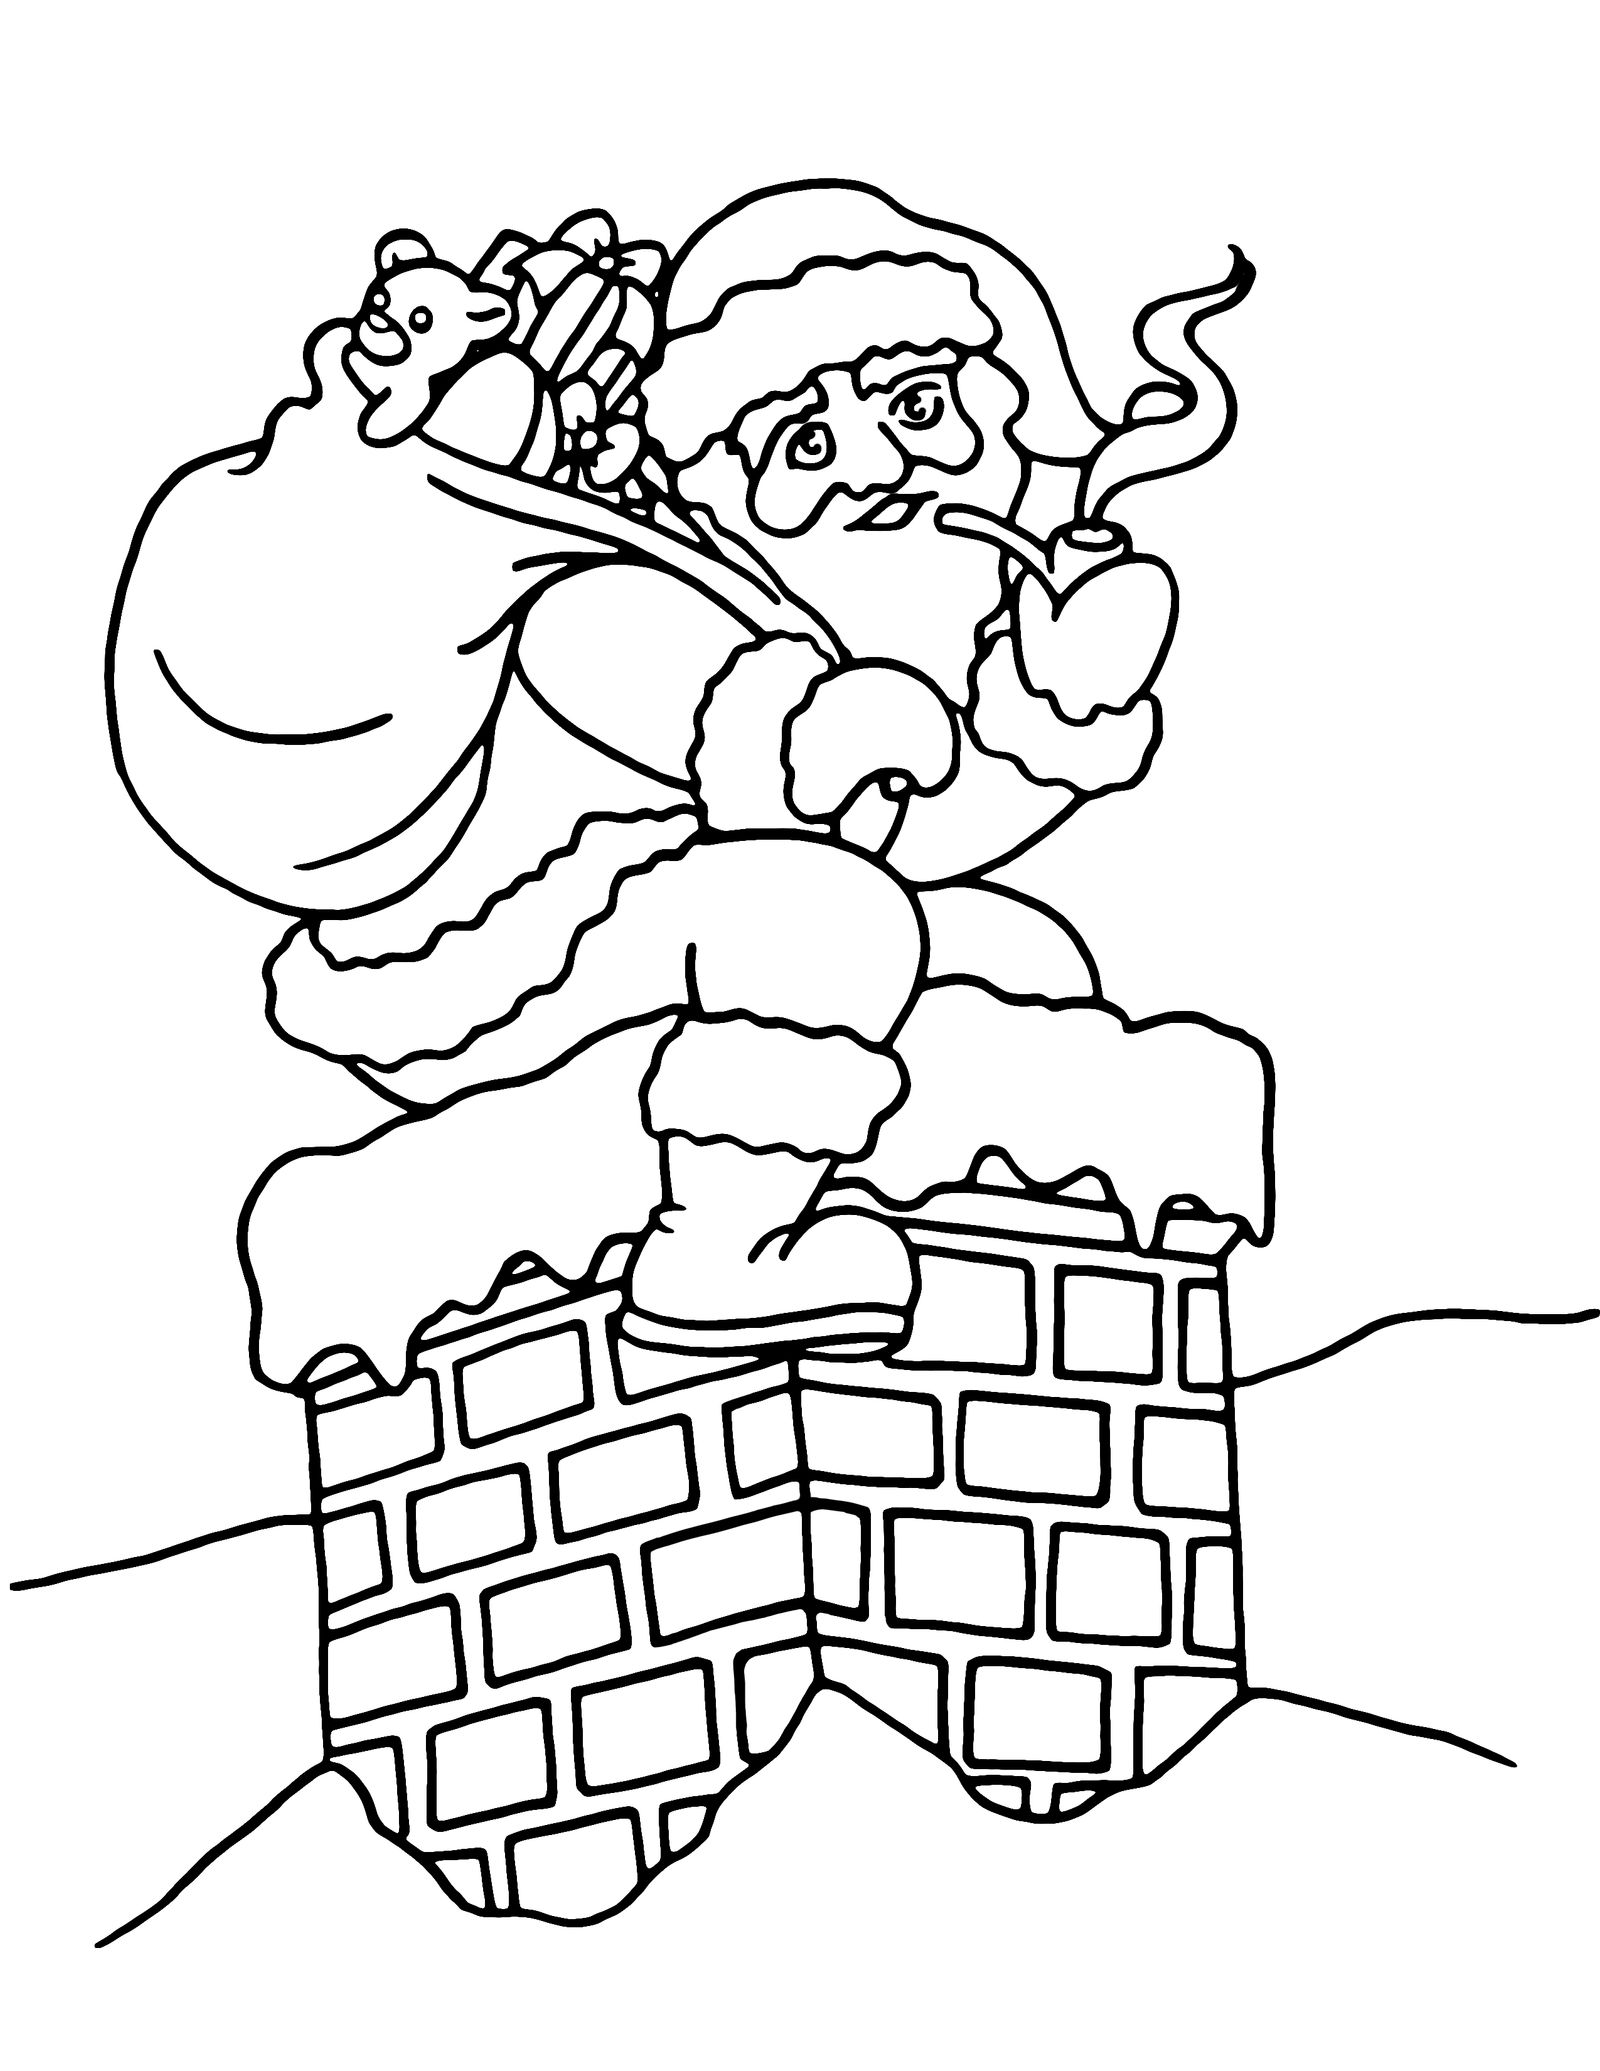 Santa Coloring Page by CetivaRose on DeviantArt